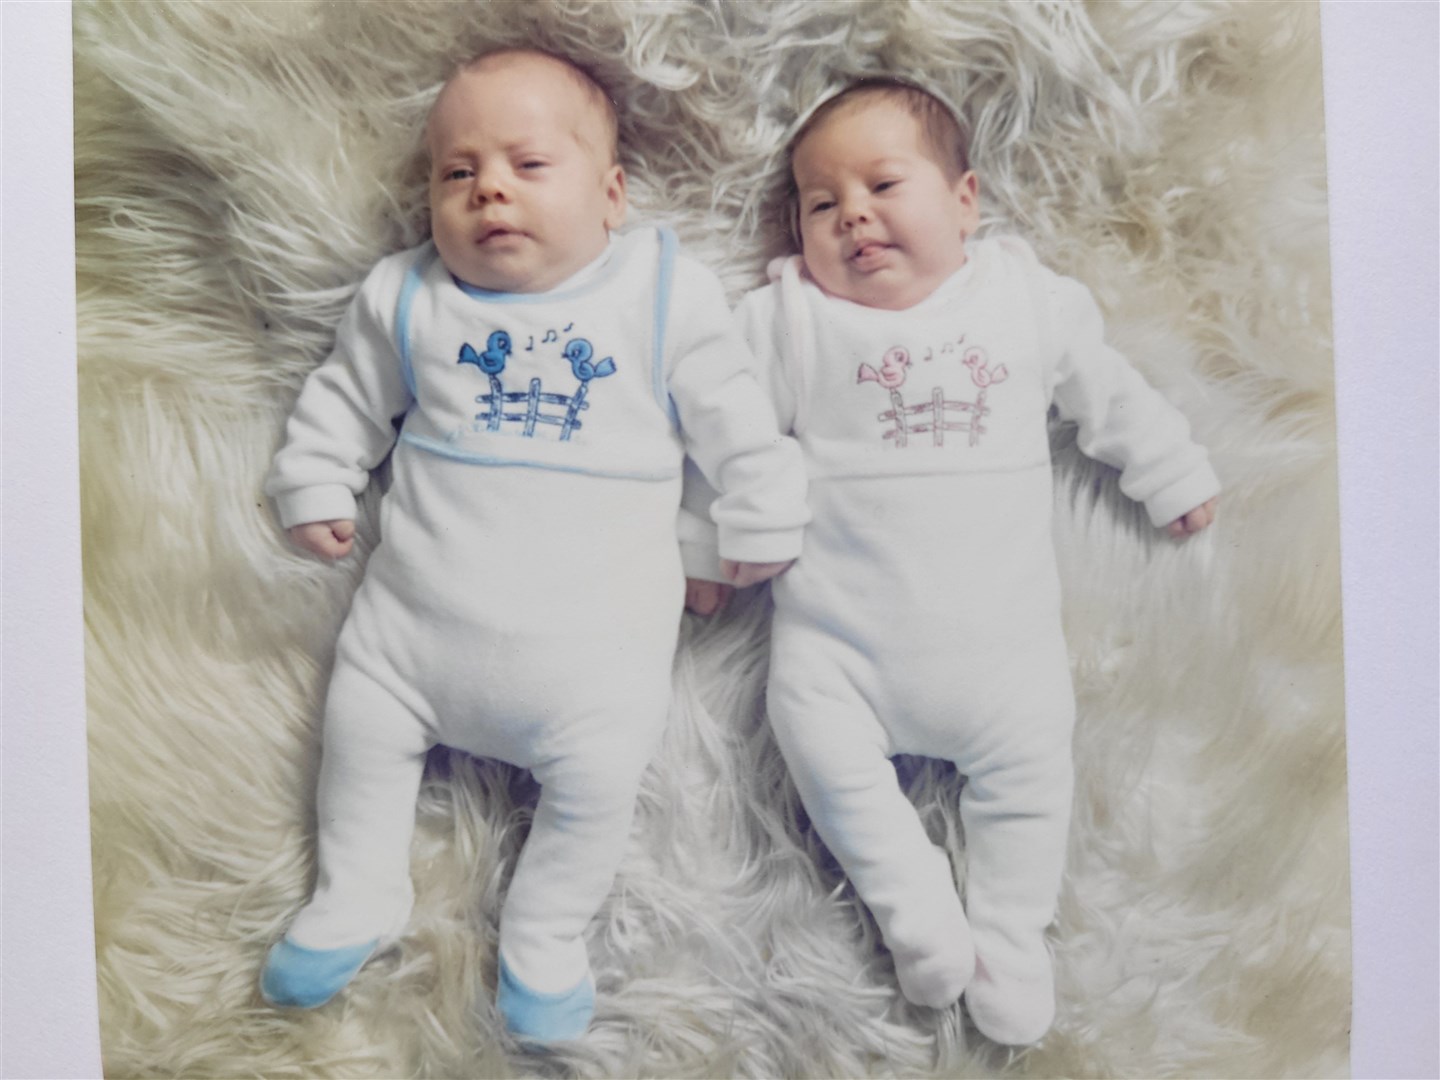 Babies David and Lynsey Henderson who were born on board a Loganair aircraft.